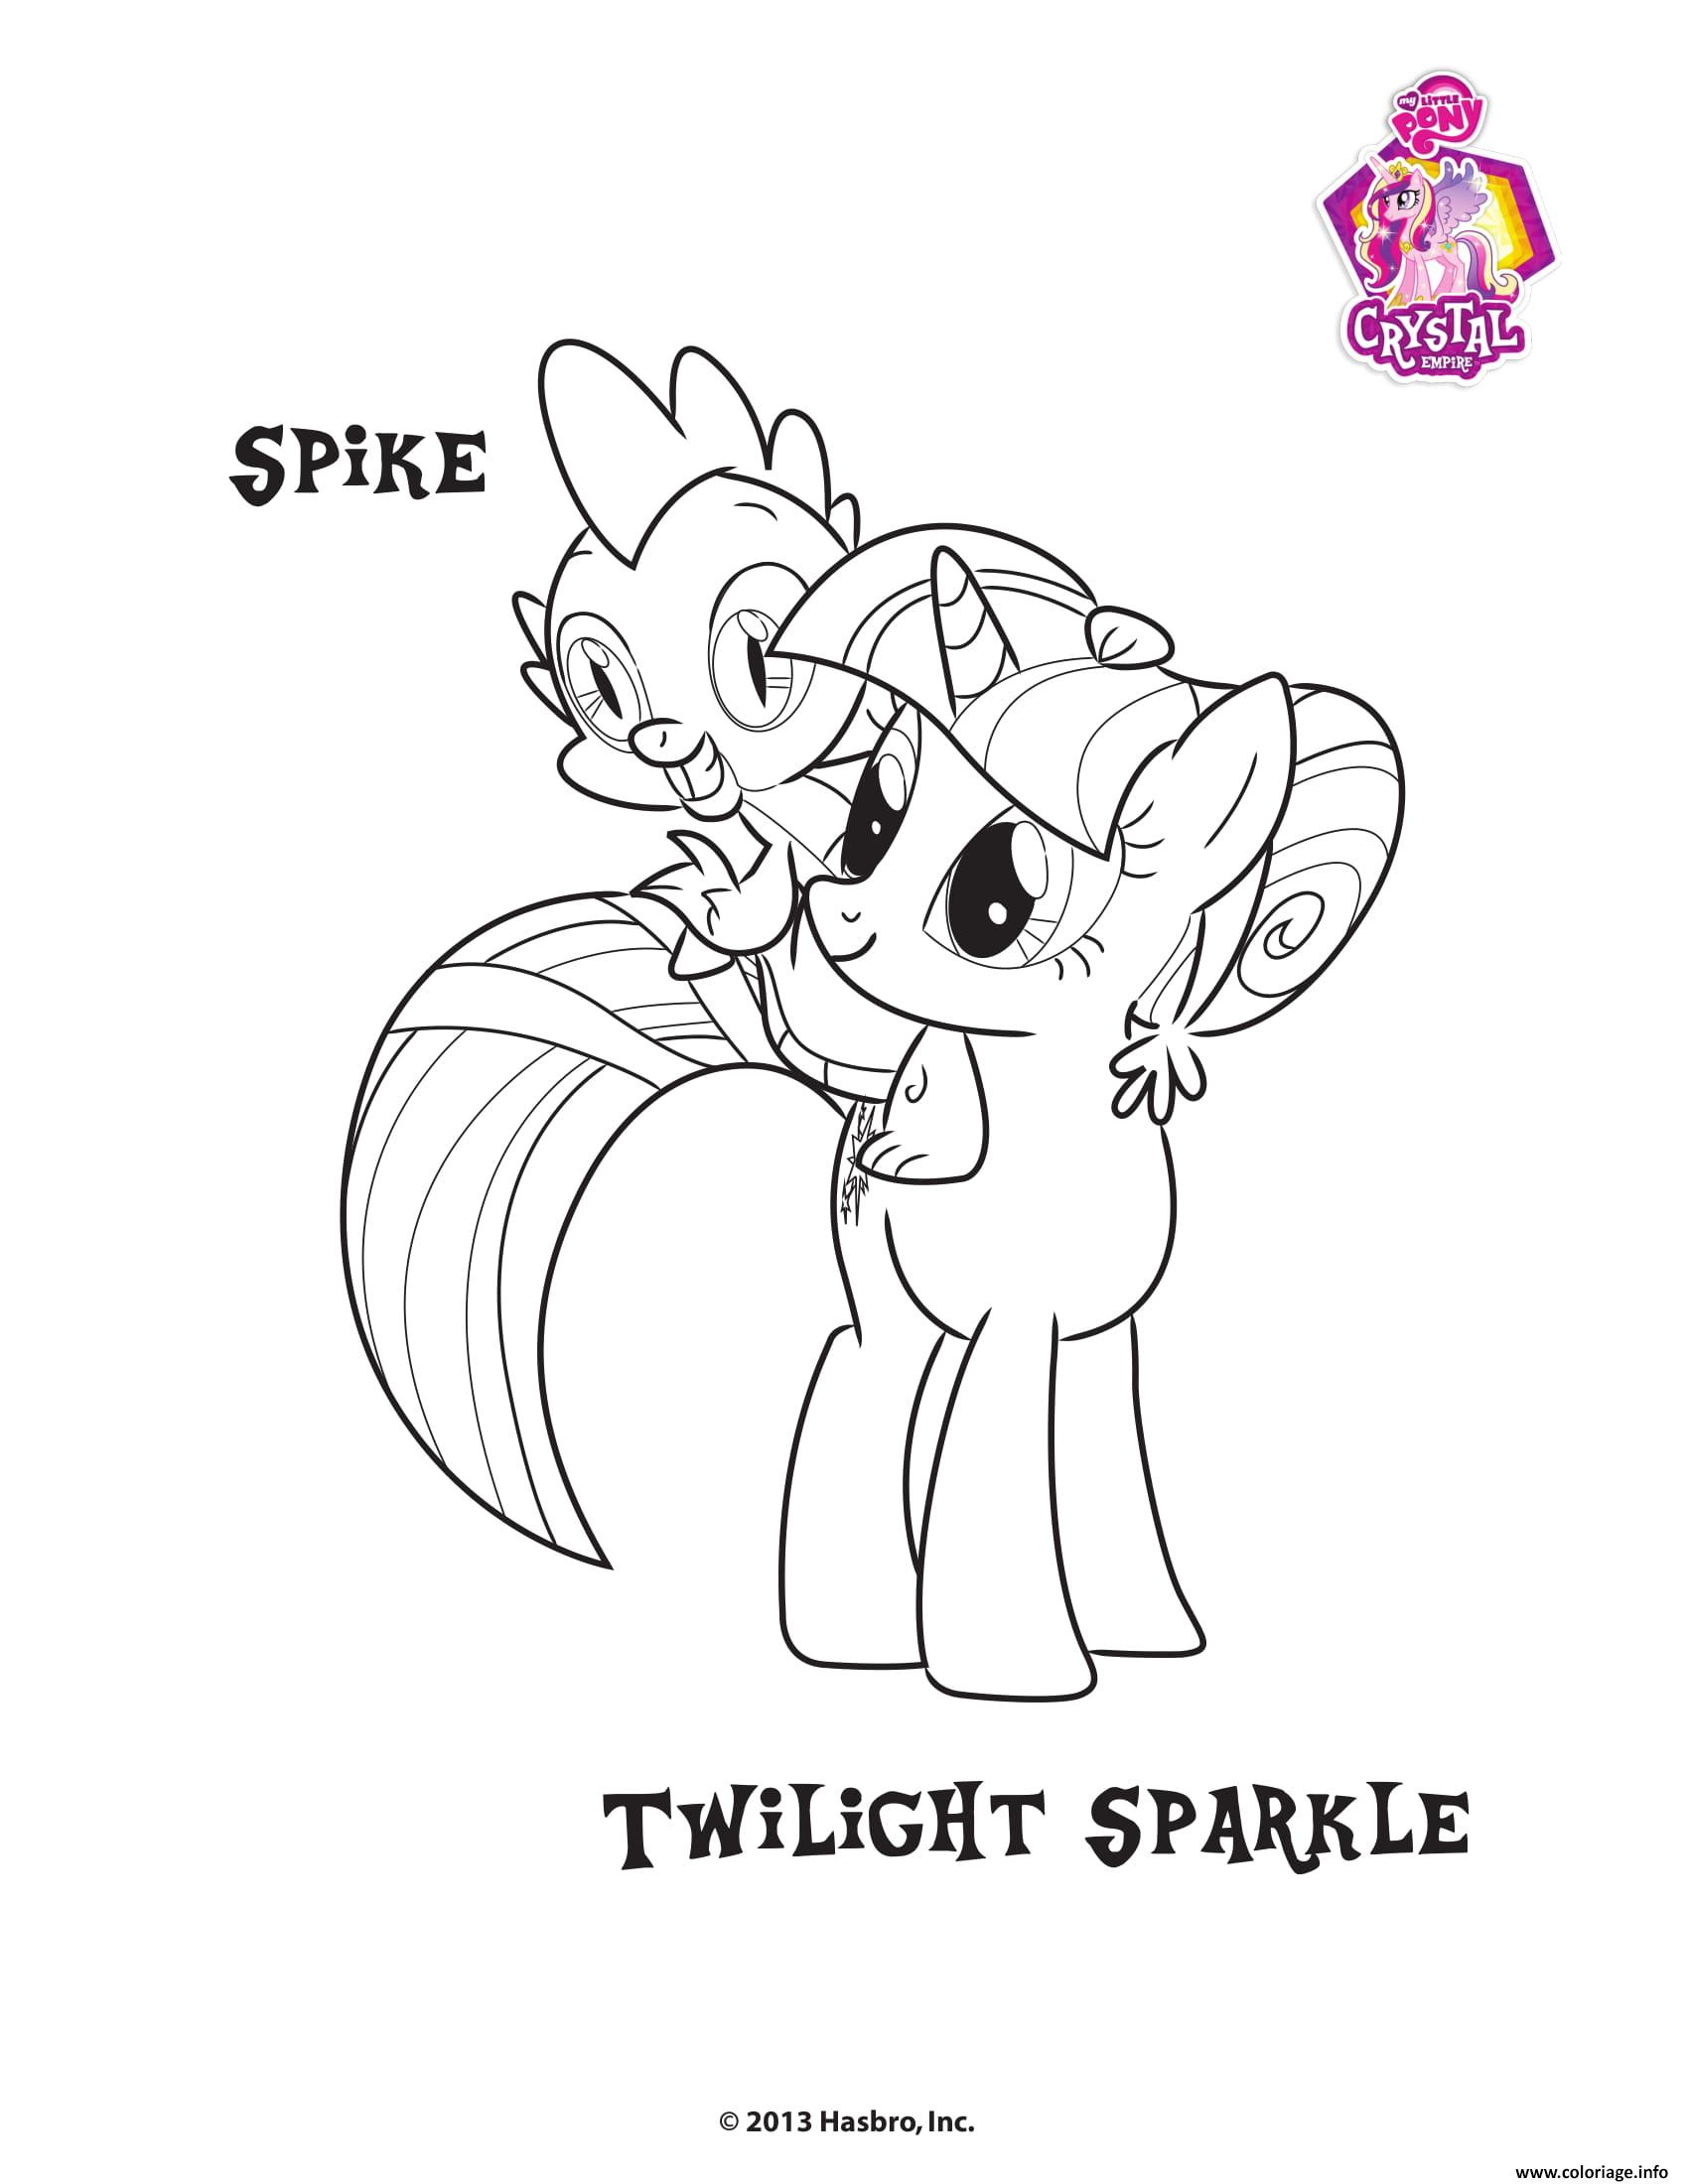 Coloriage Spike Twilight Sparkle Empire Crystal Dessin à Imprimer